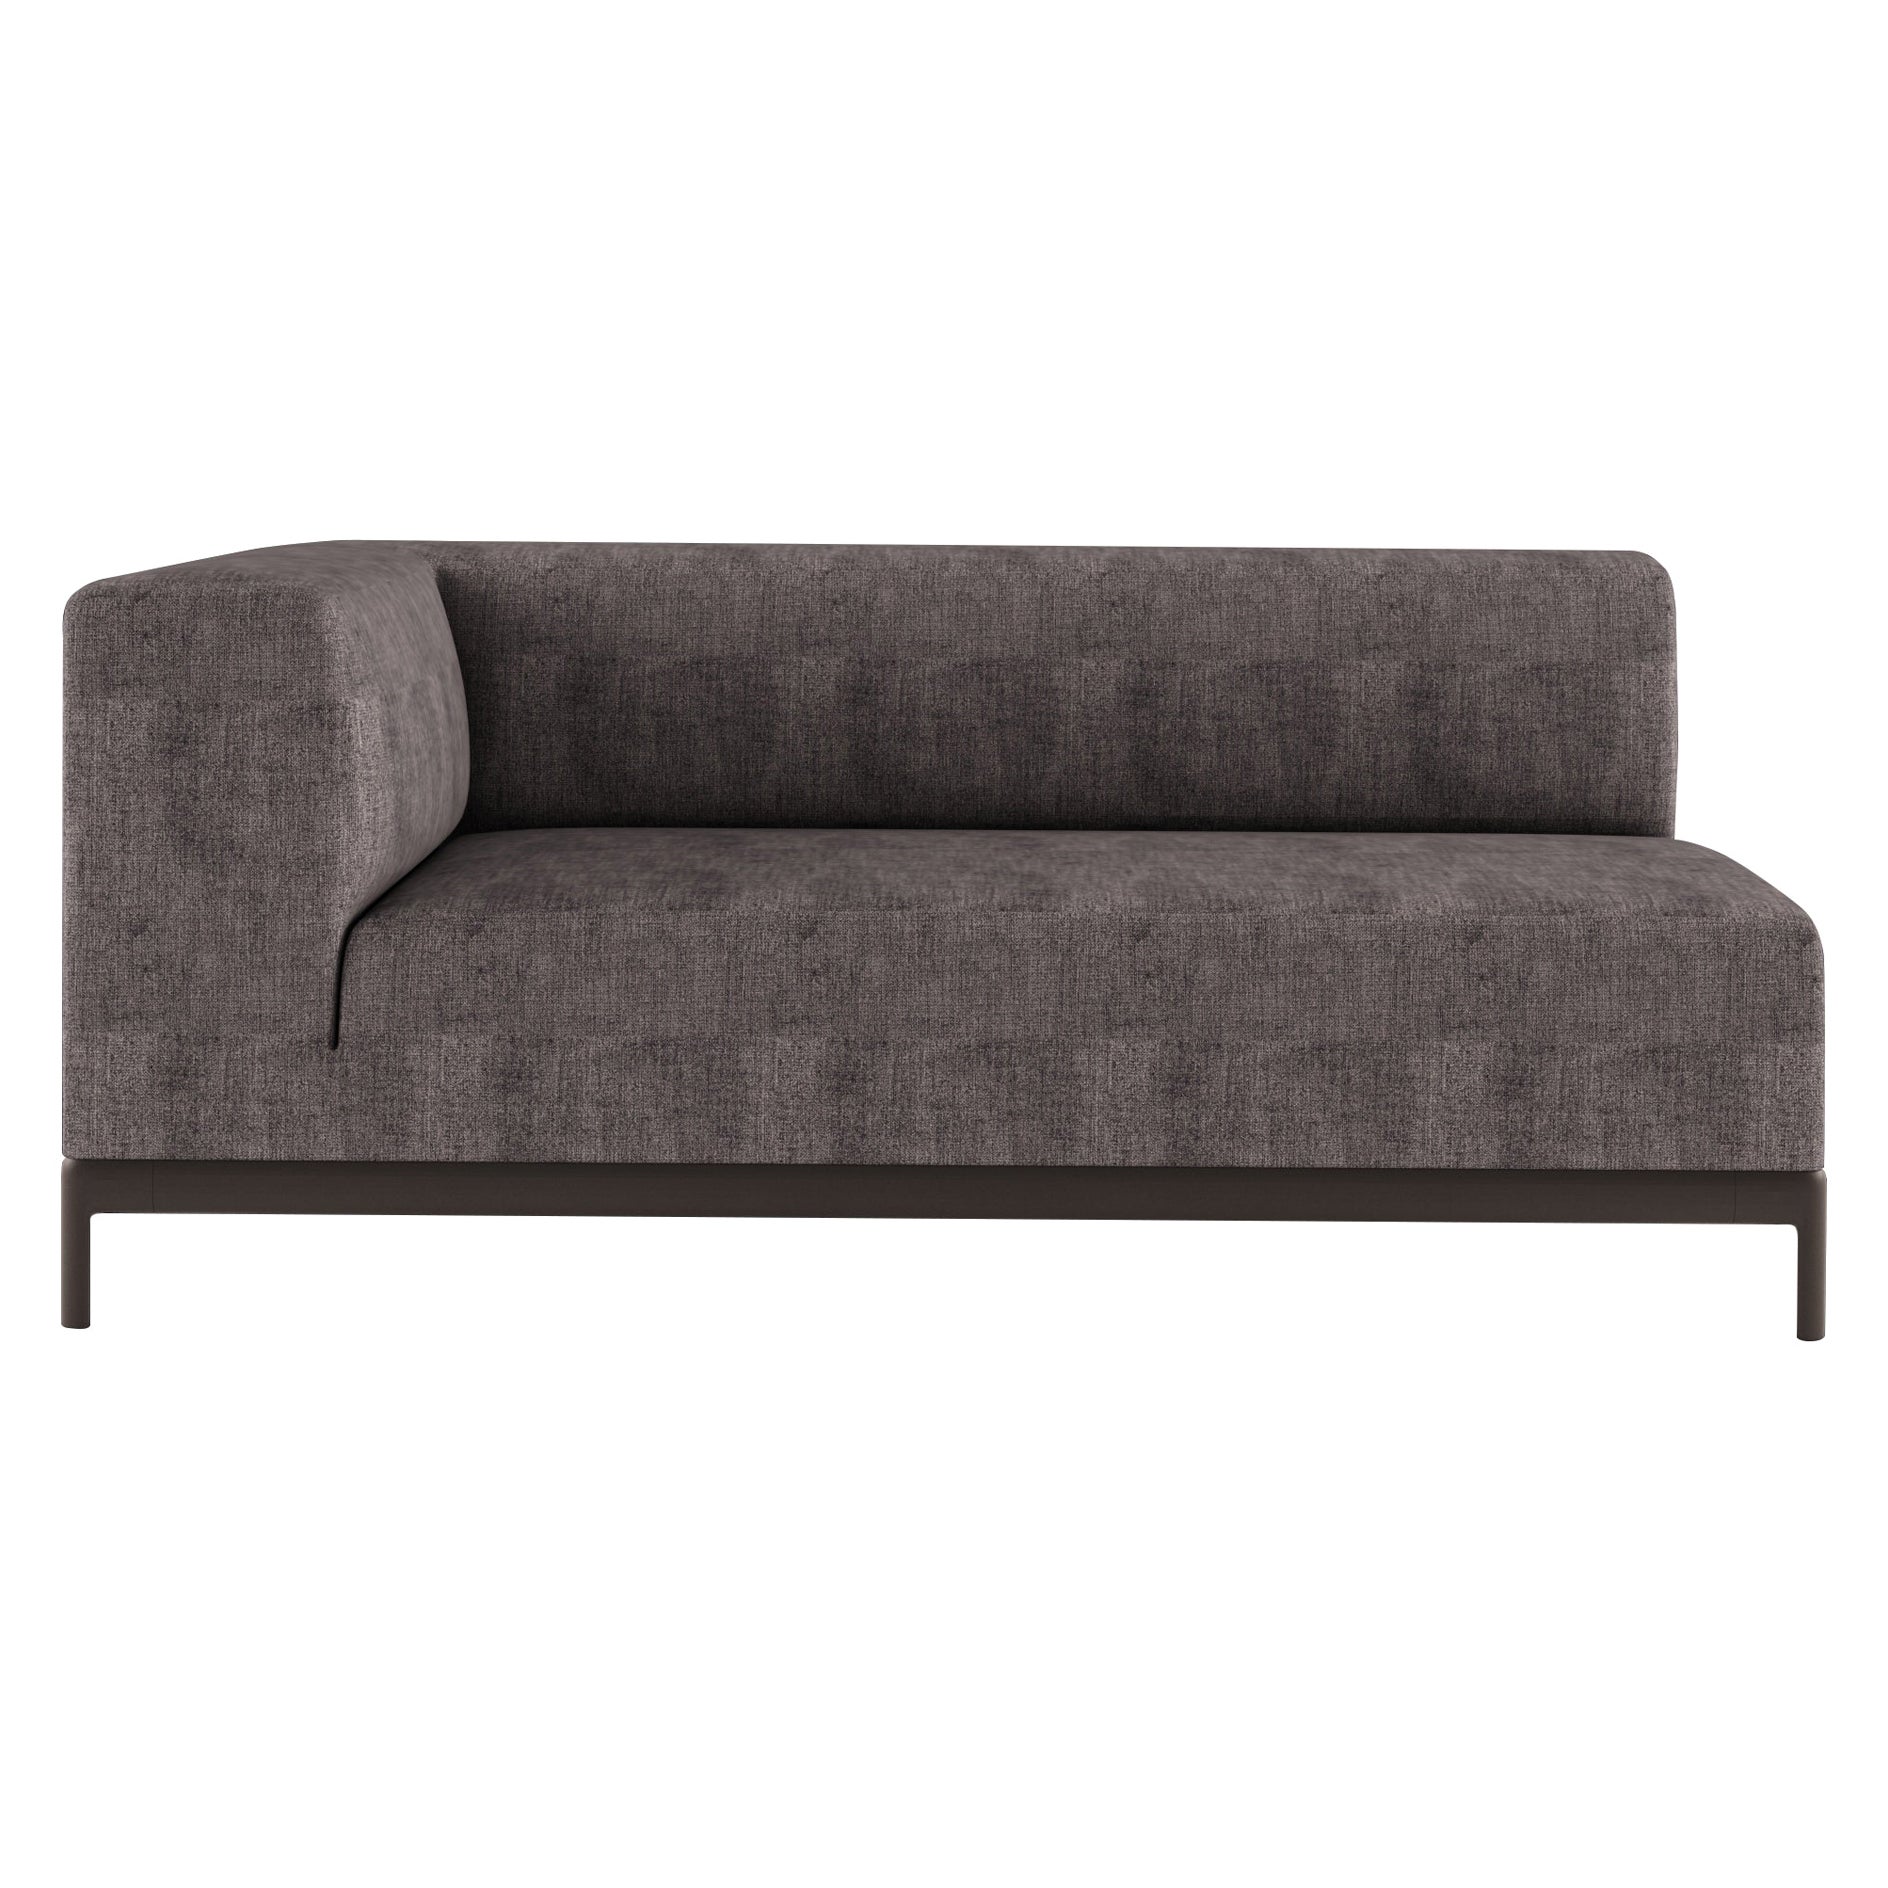 Alias P37 AluZen Soft Angular Sofa with Upholstery & Lacquered Aluminum Frame